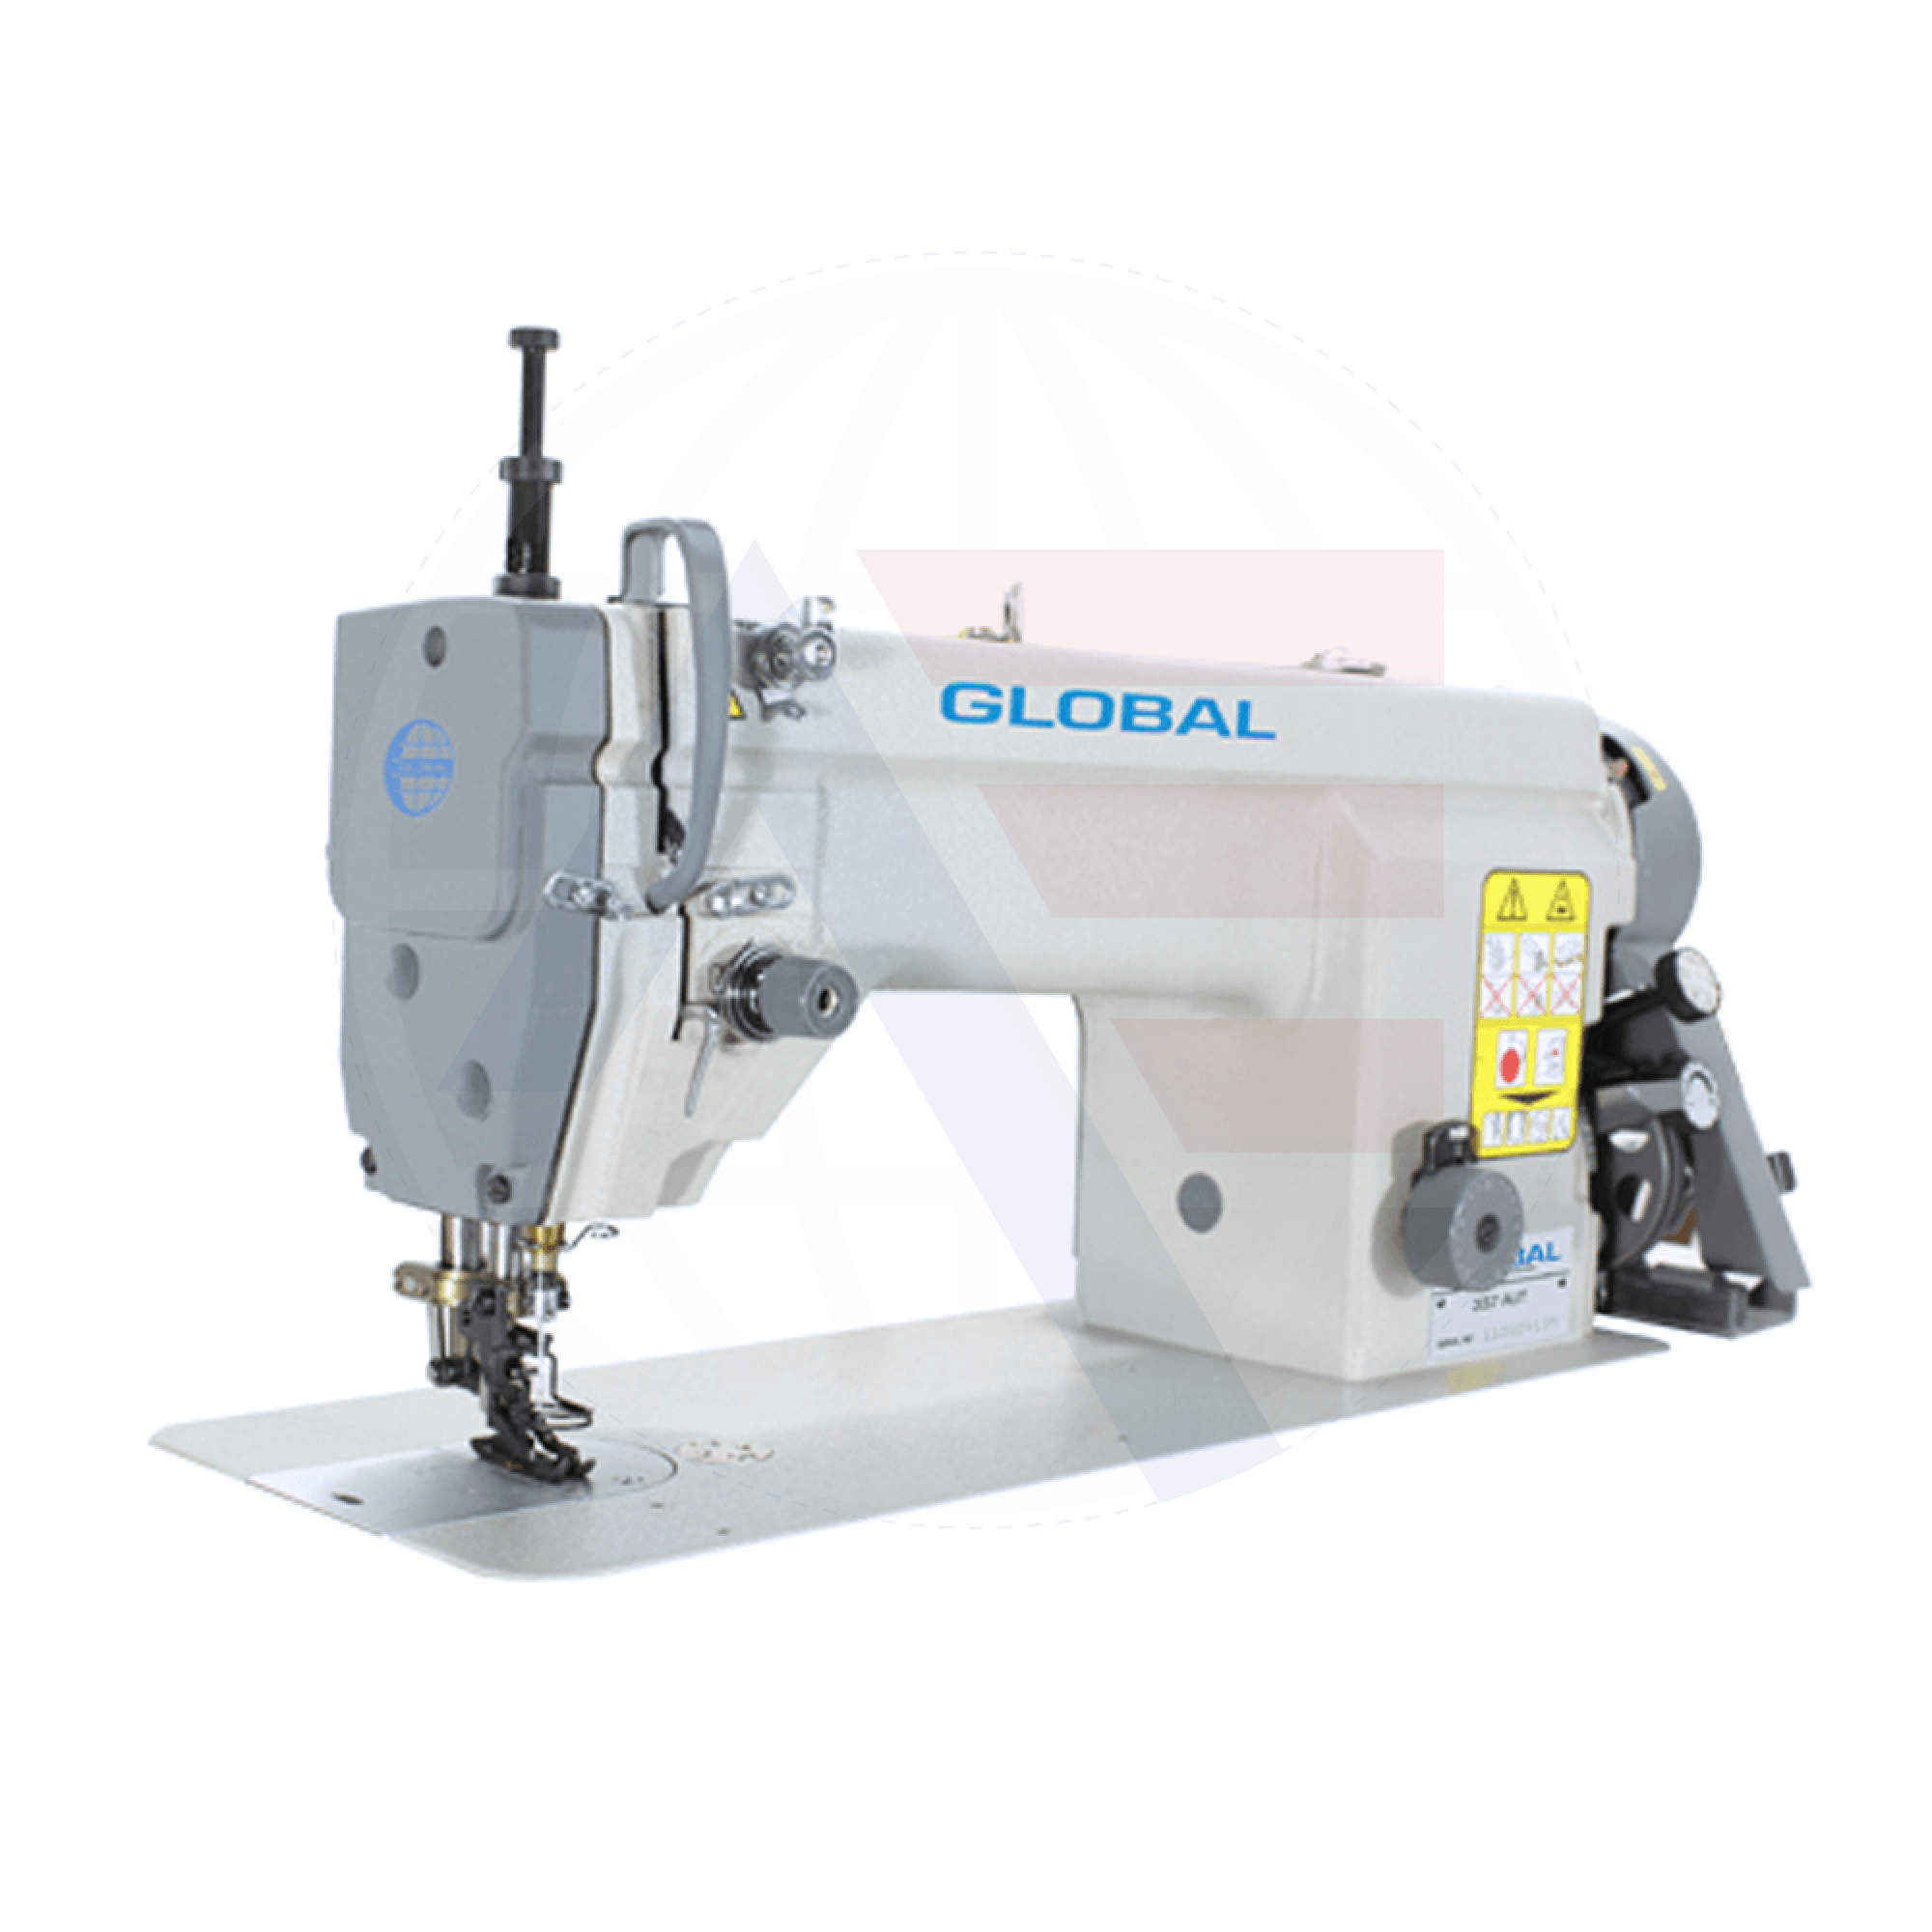 Global 337 Series Top-Feed Lockstitch Machine Sewing Machines